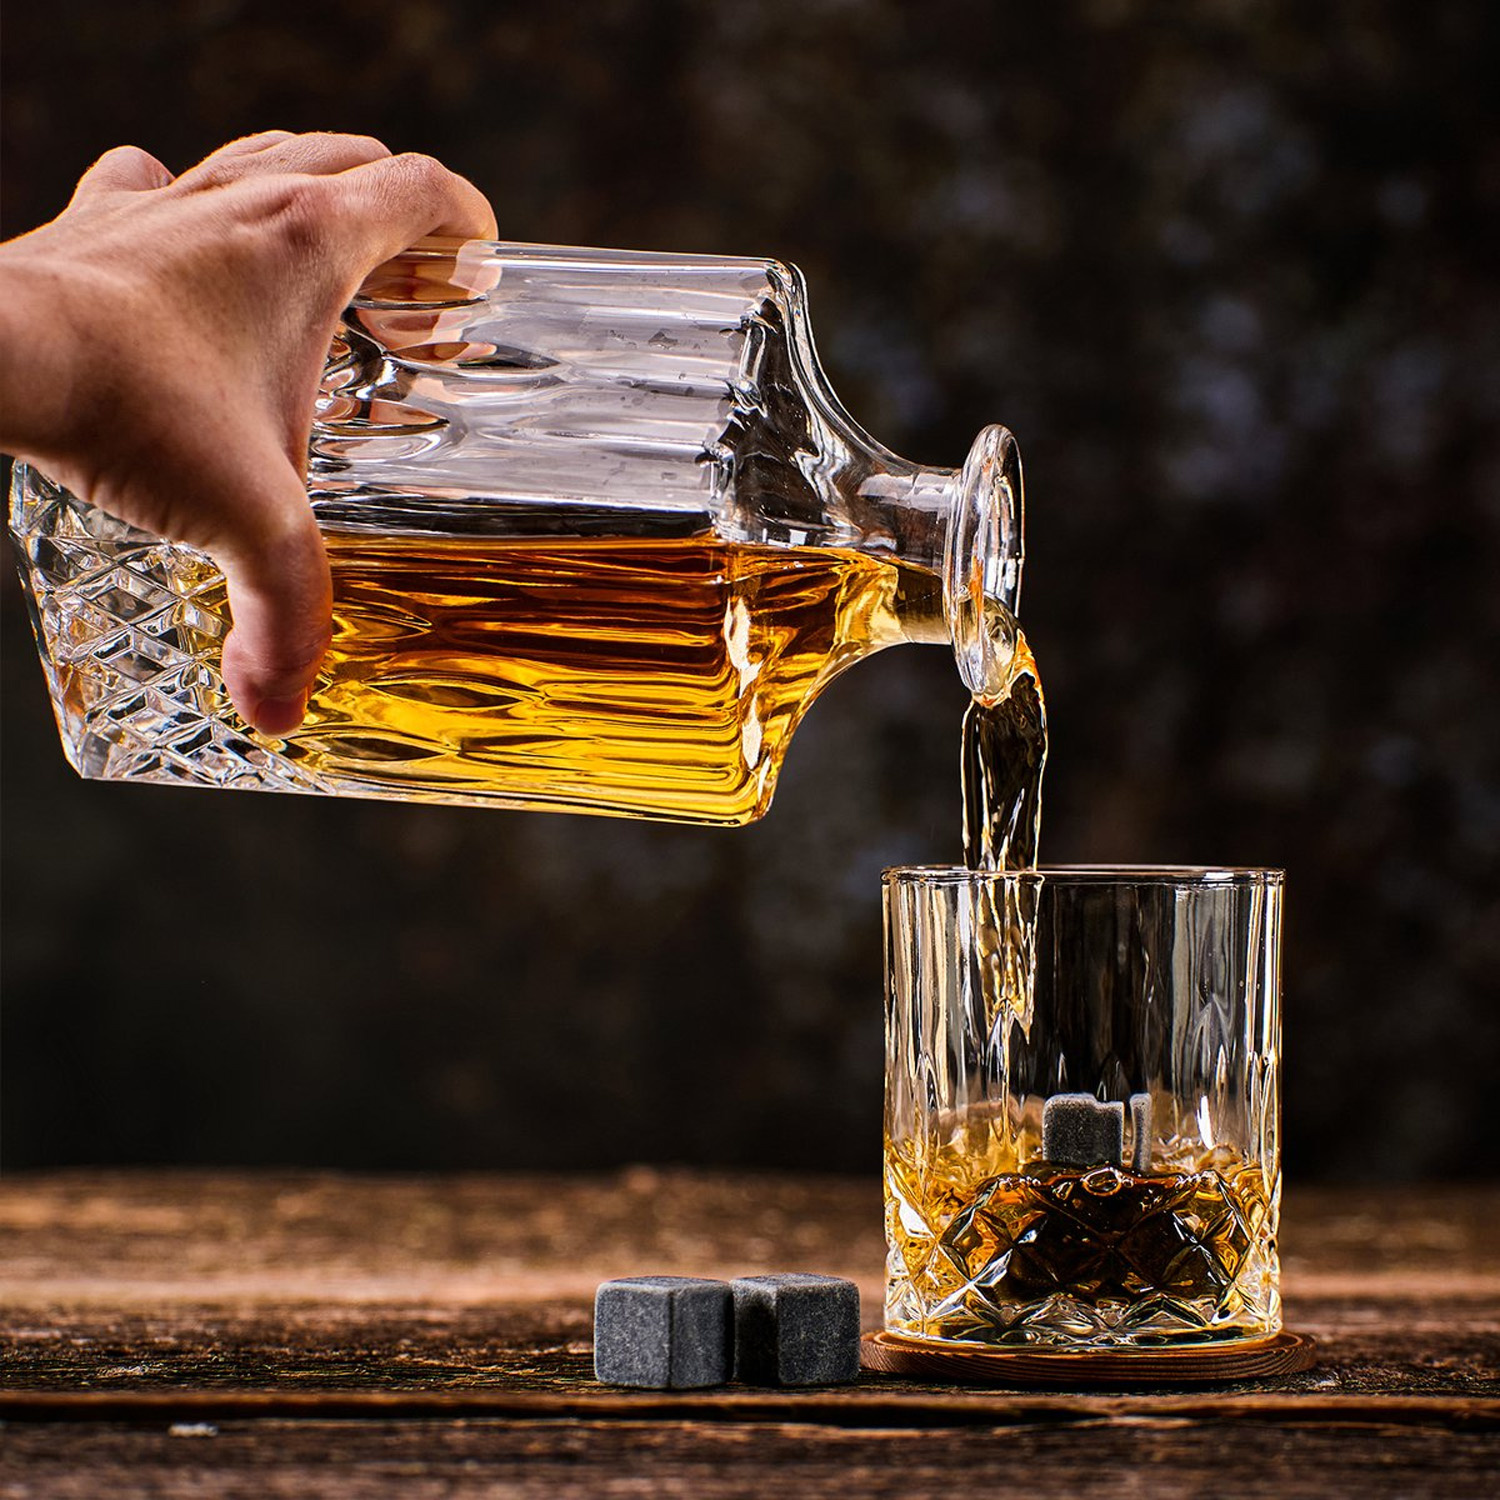 Nomfy Whiskey Stenen Voor Koude Drankjes - Herbruikbare Whiskey Stones - Whiskeystenen IJsblokjes - 9 Stuks